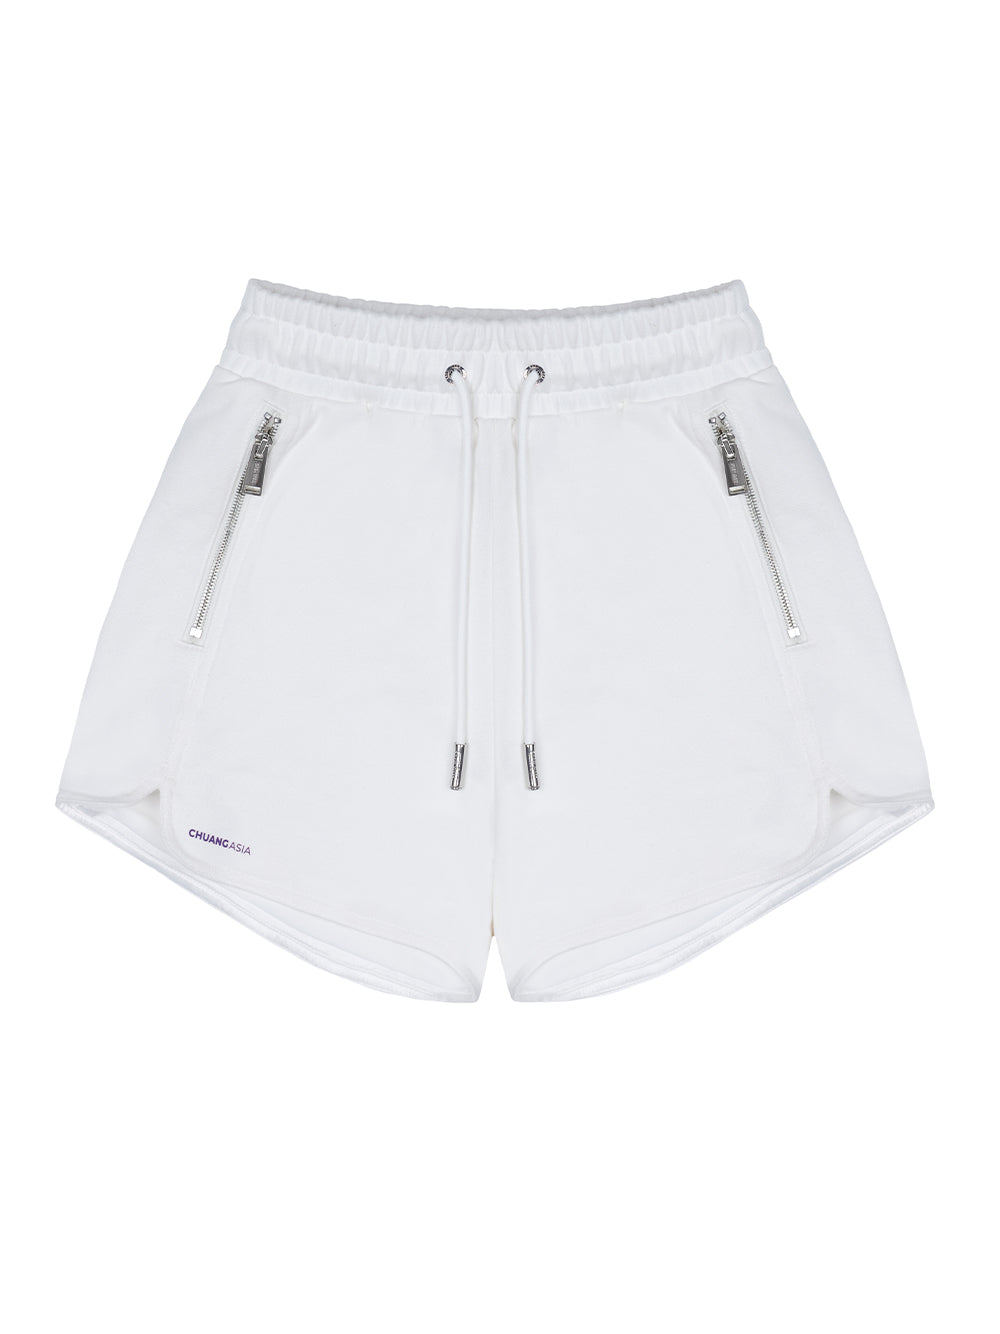 TEAM WANG design x CHUANG ASIA Jersey Casual Shorts (White)